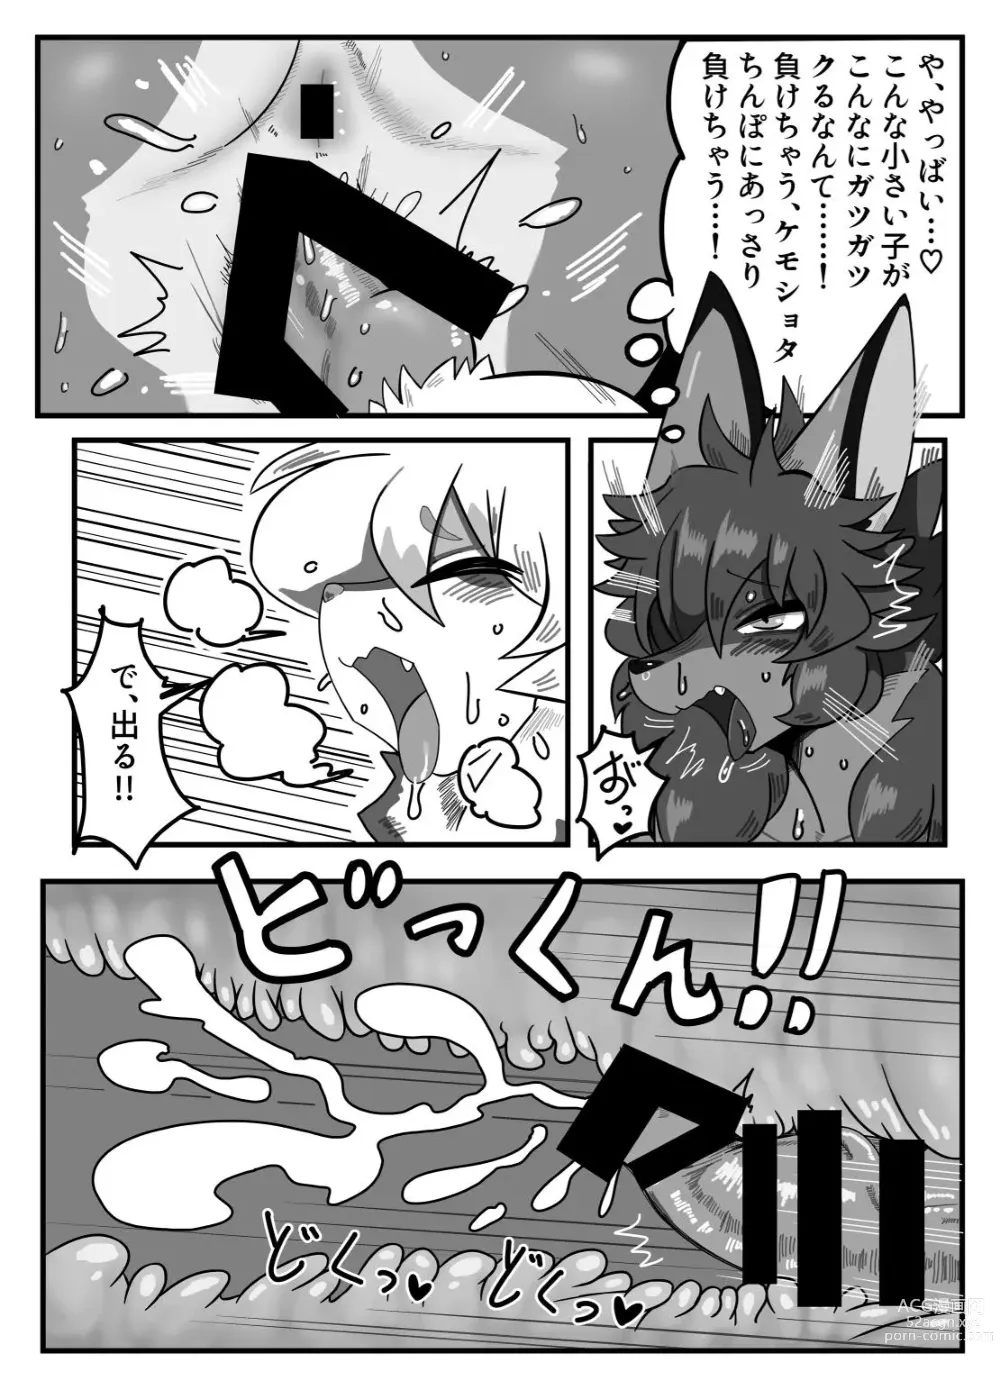 Page 22 of doujinshi My chemoshota boyfriend 2